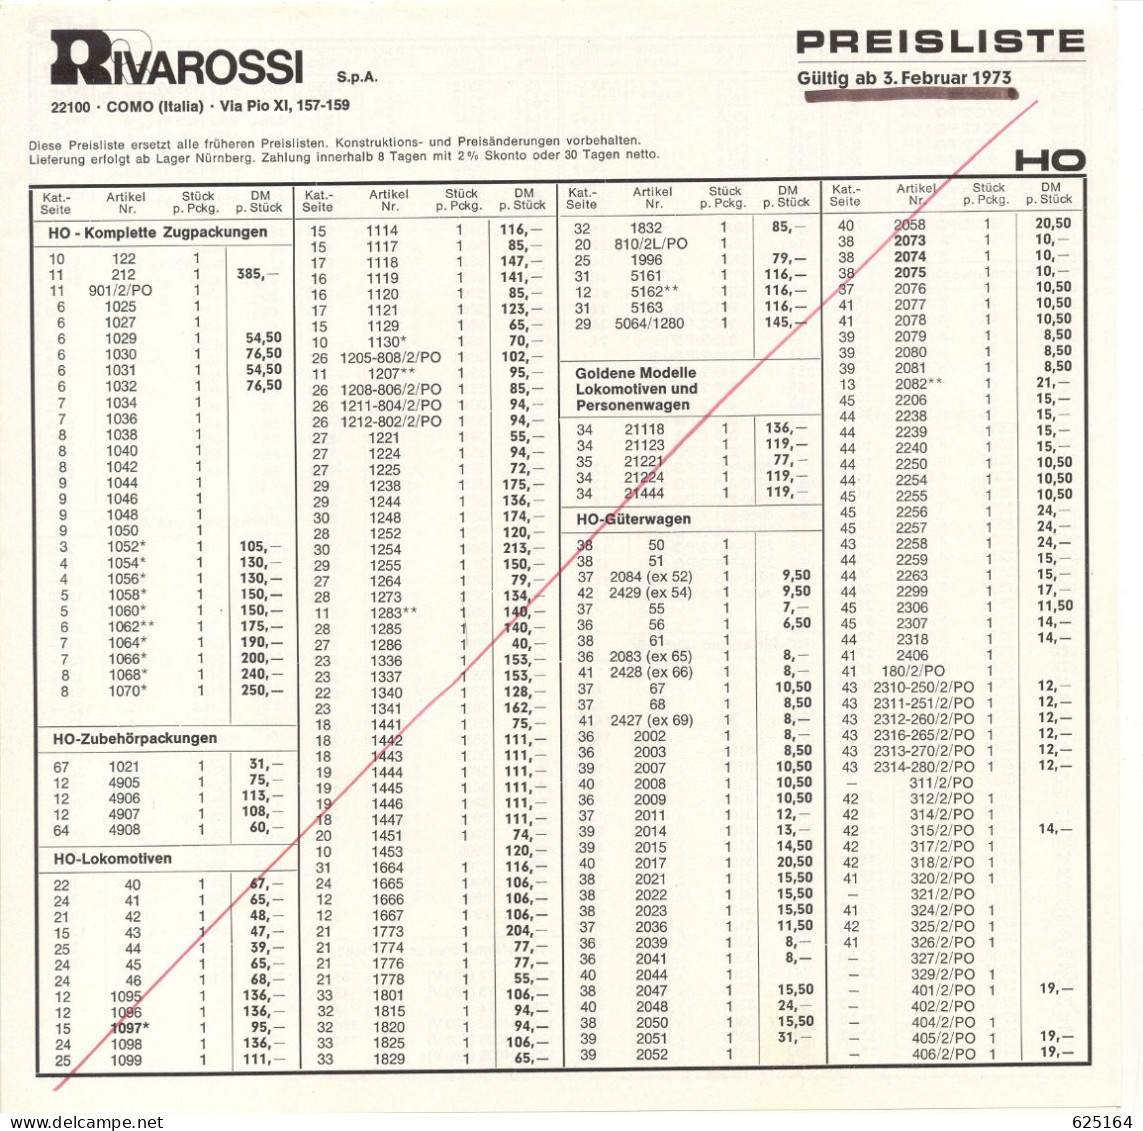 Catalogue RIVAROSSI 1974 HO O N ONLY Preisliste DM - Deutsch